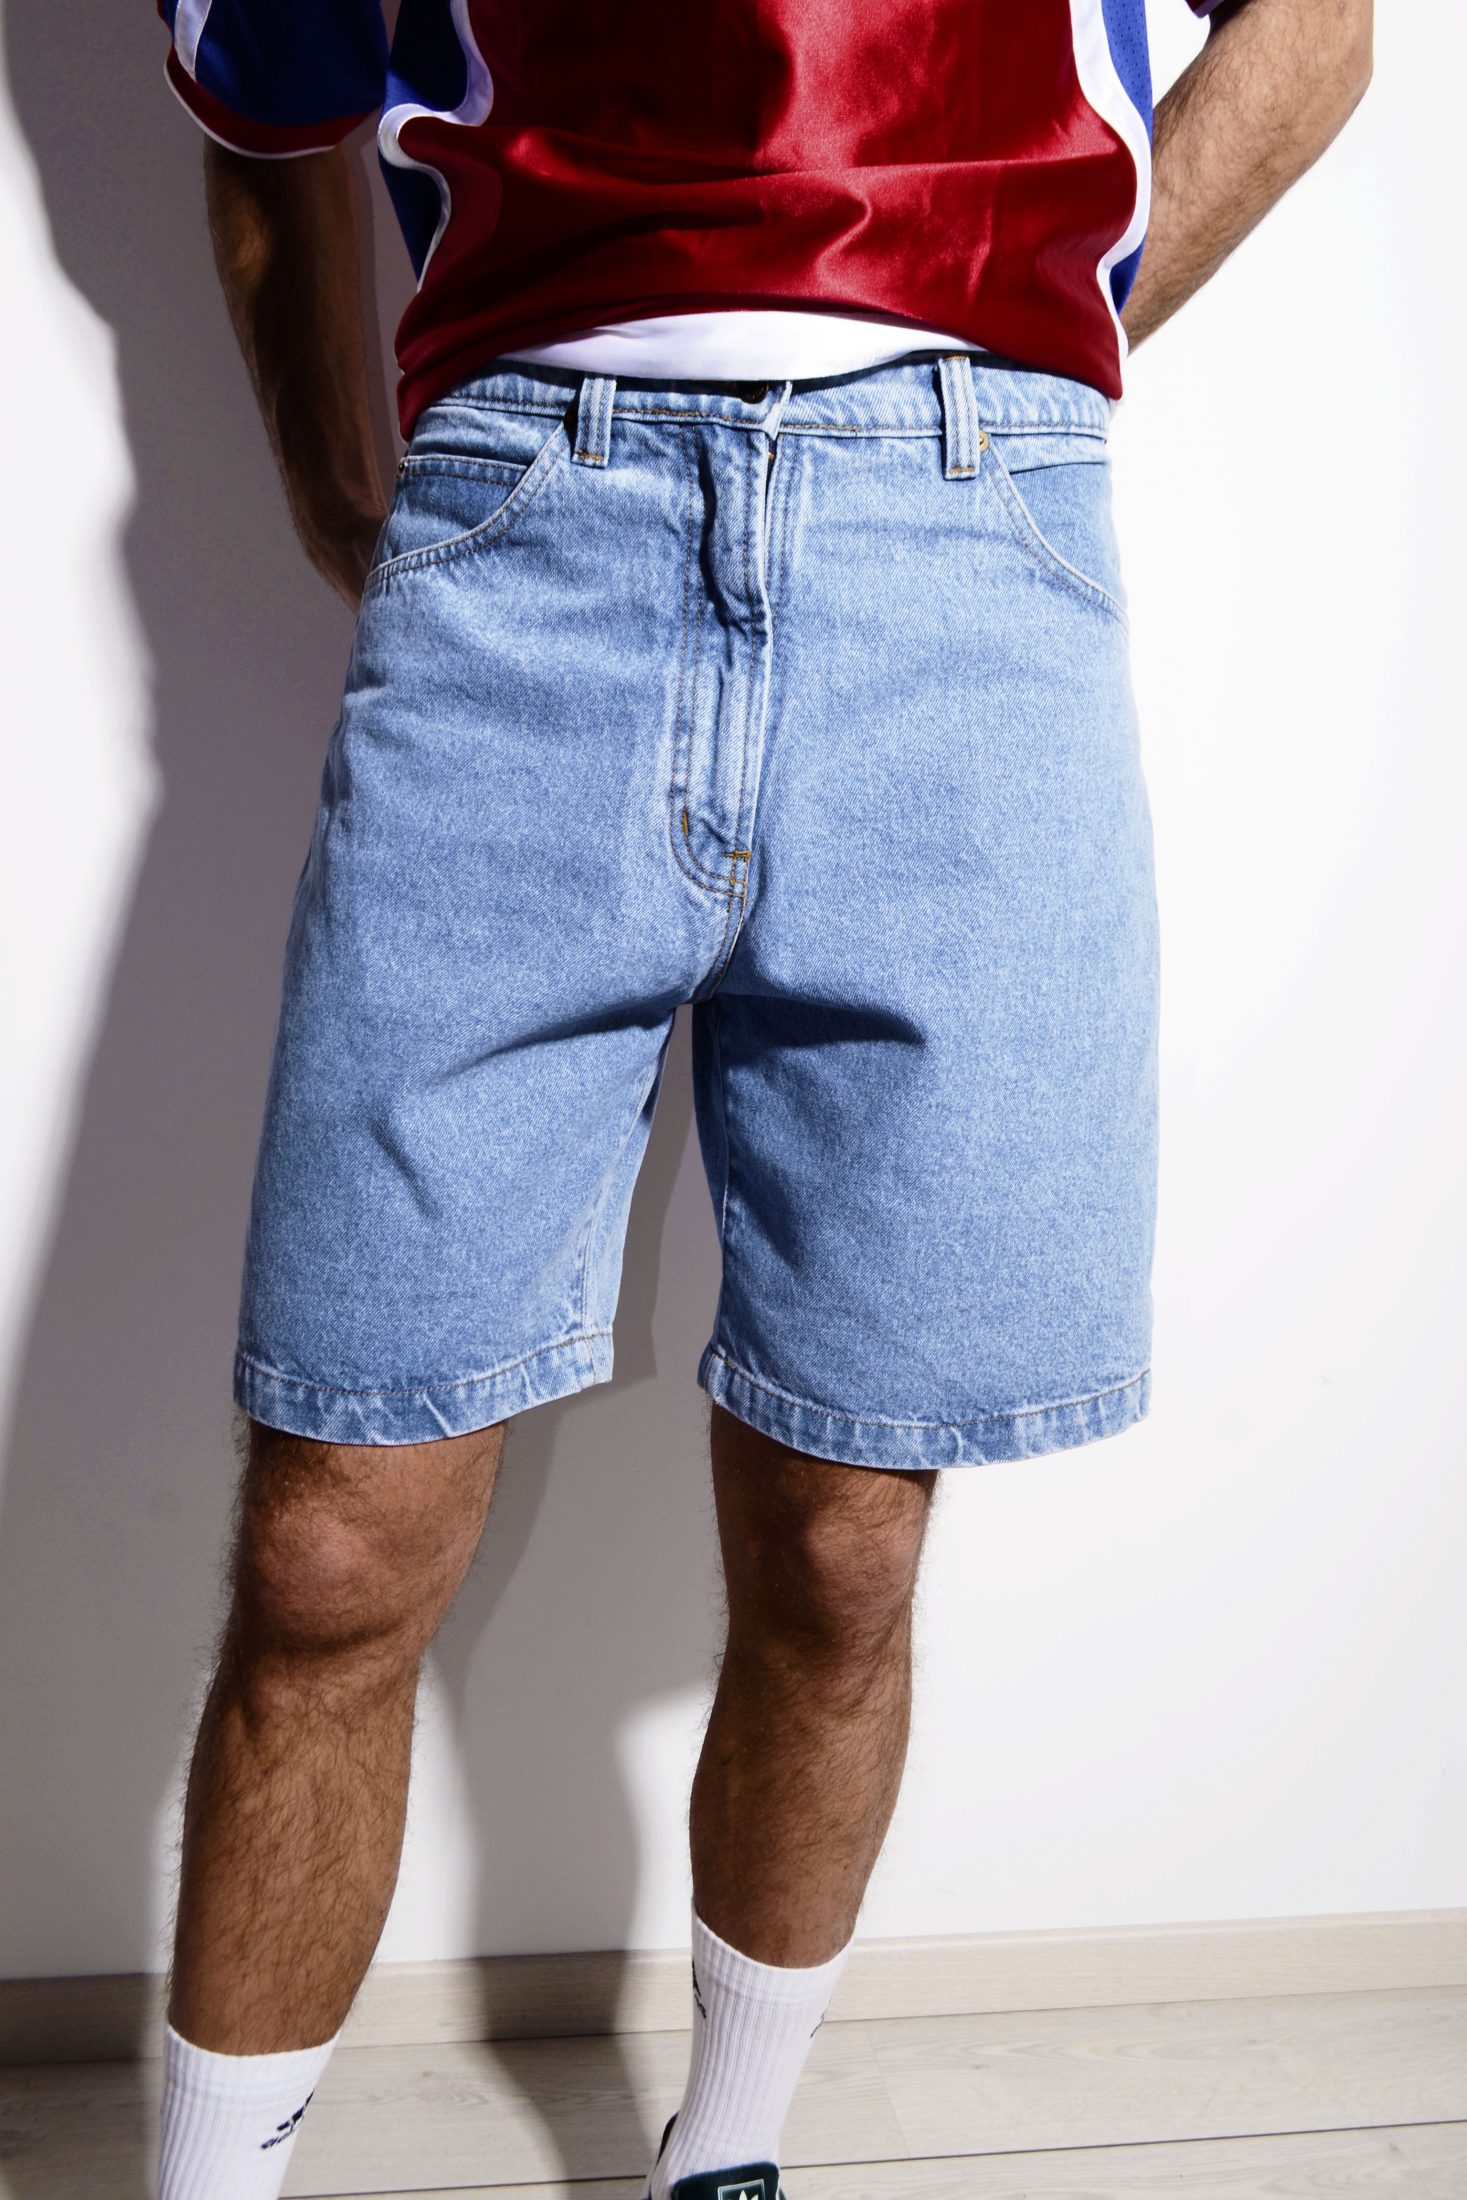 90s jean shorts mens